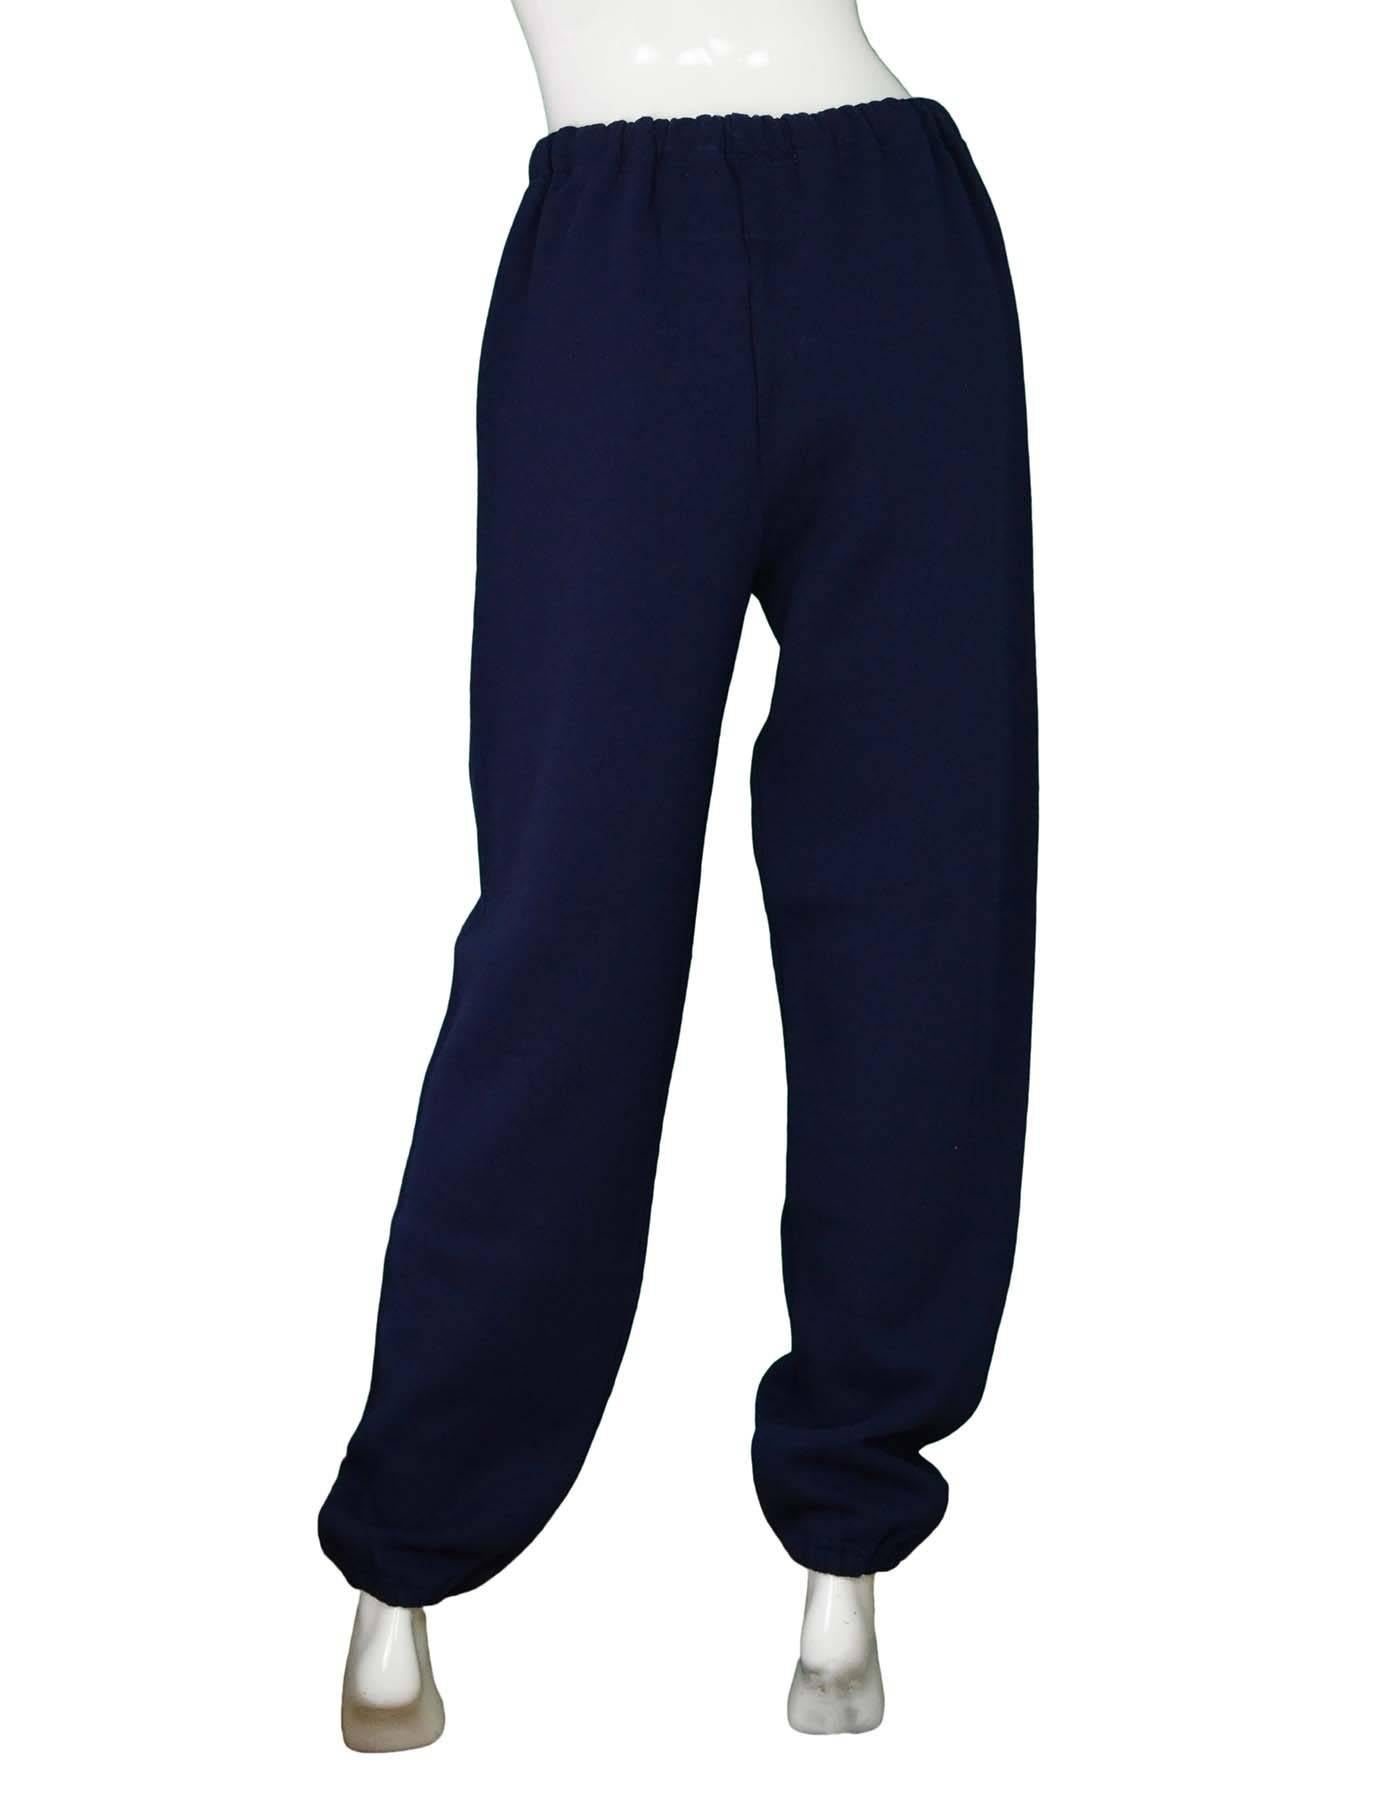 FREE CITY Navy Sweatpants Sz L rt. $125 at 1stDibs | freecity 